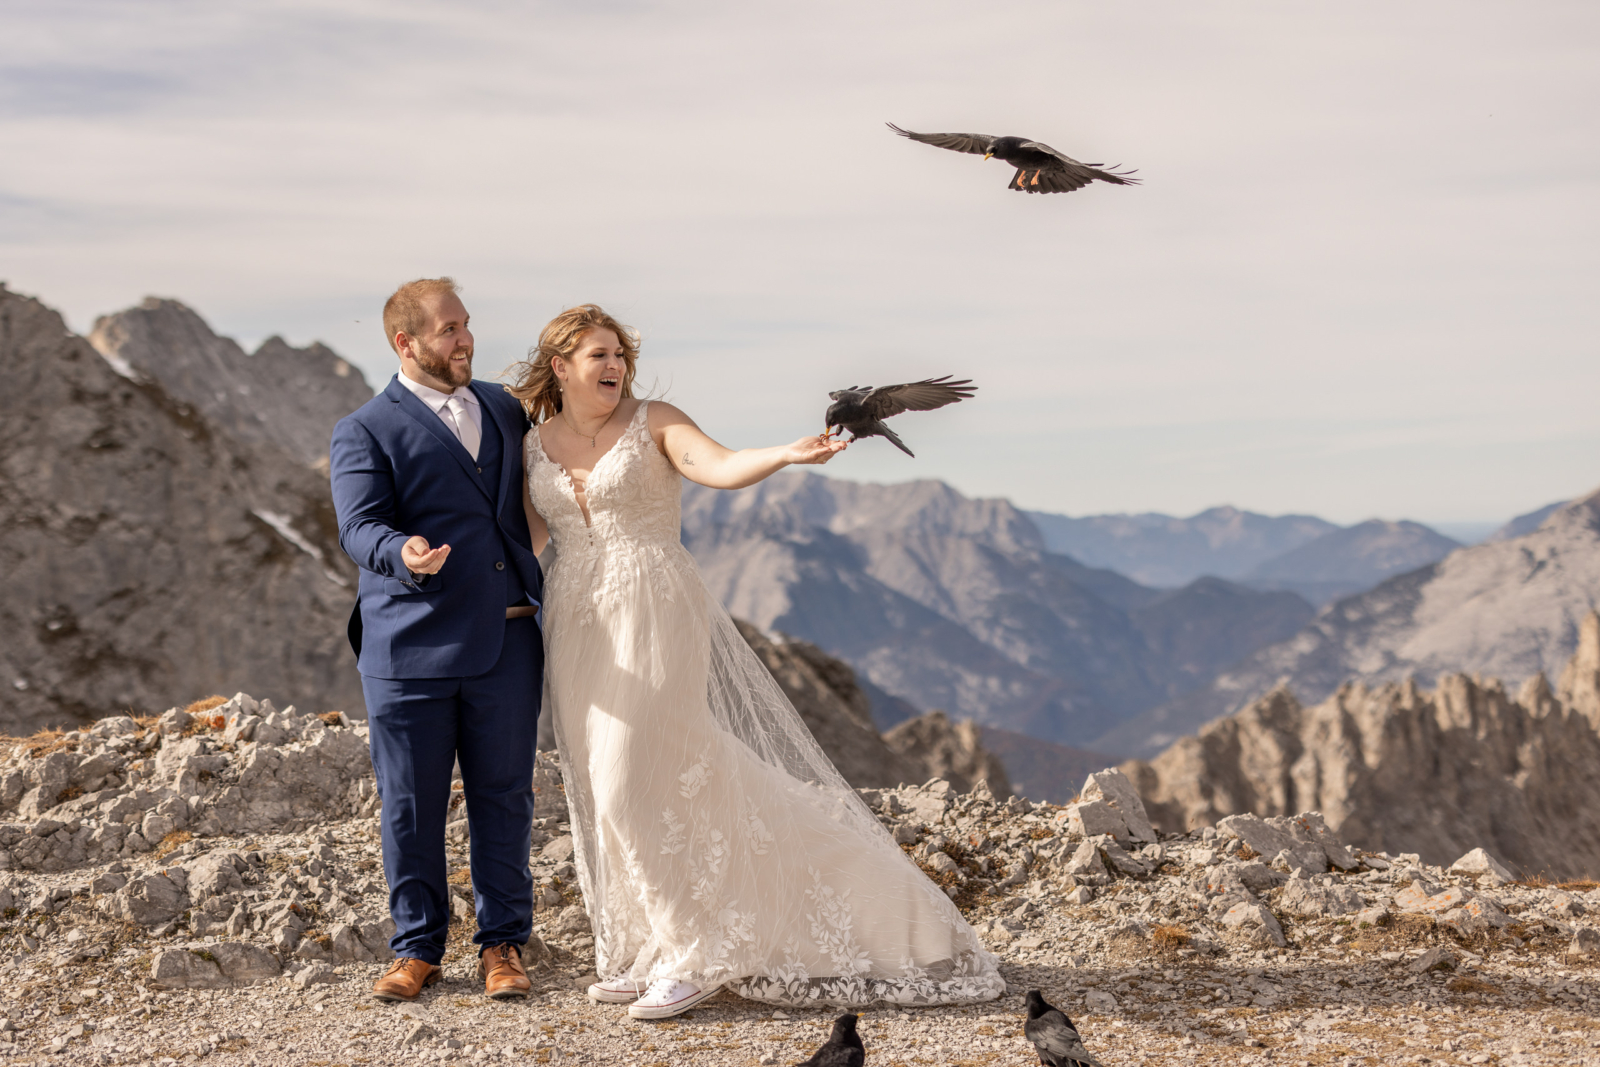 Alpine Birds as surprise wedding guests at the mountain elopement in Innsbruck, Austria